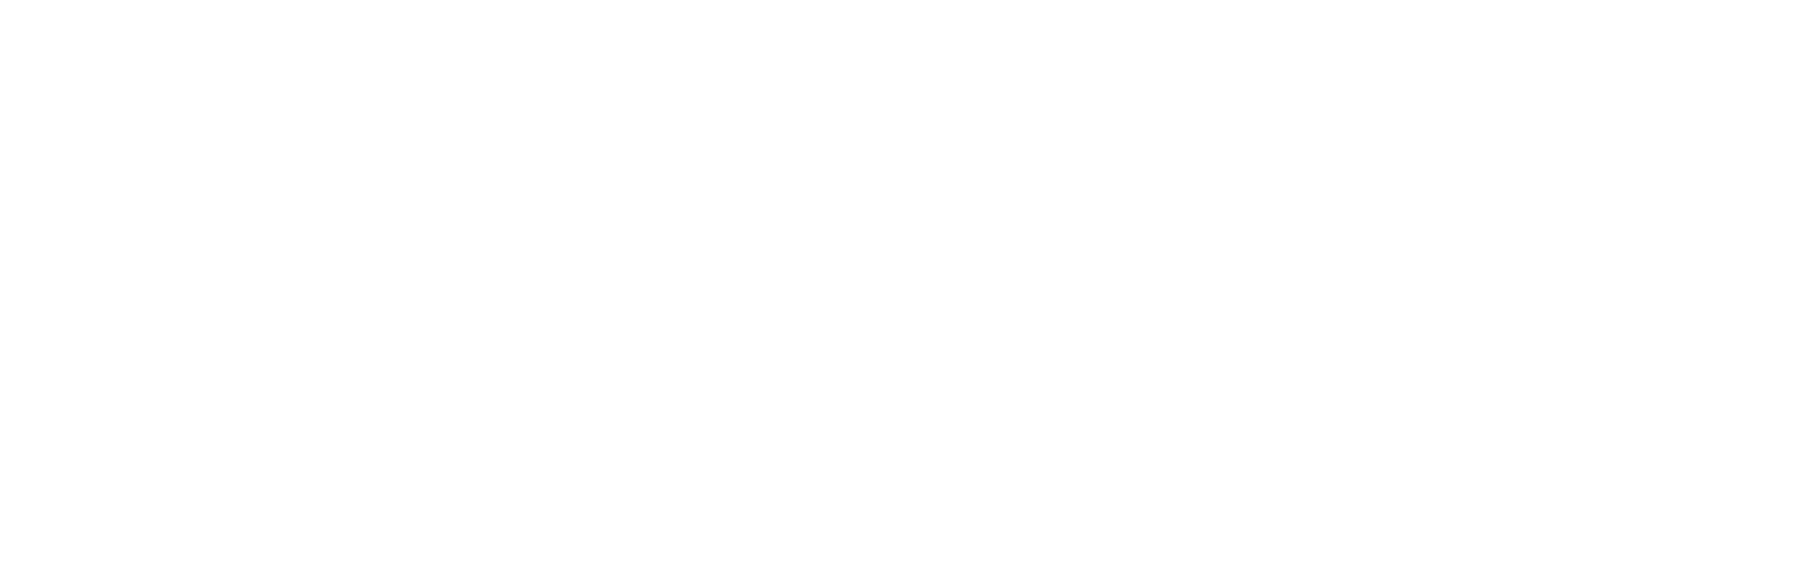 Performance Review Institute (PRI) Registrar and the International Organization for Standardization